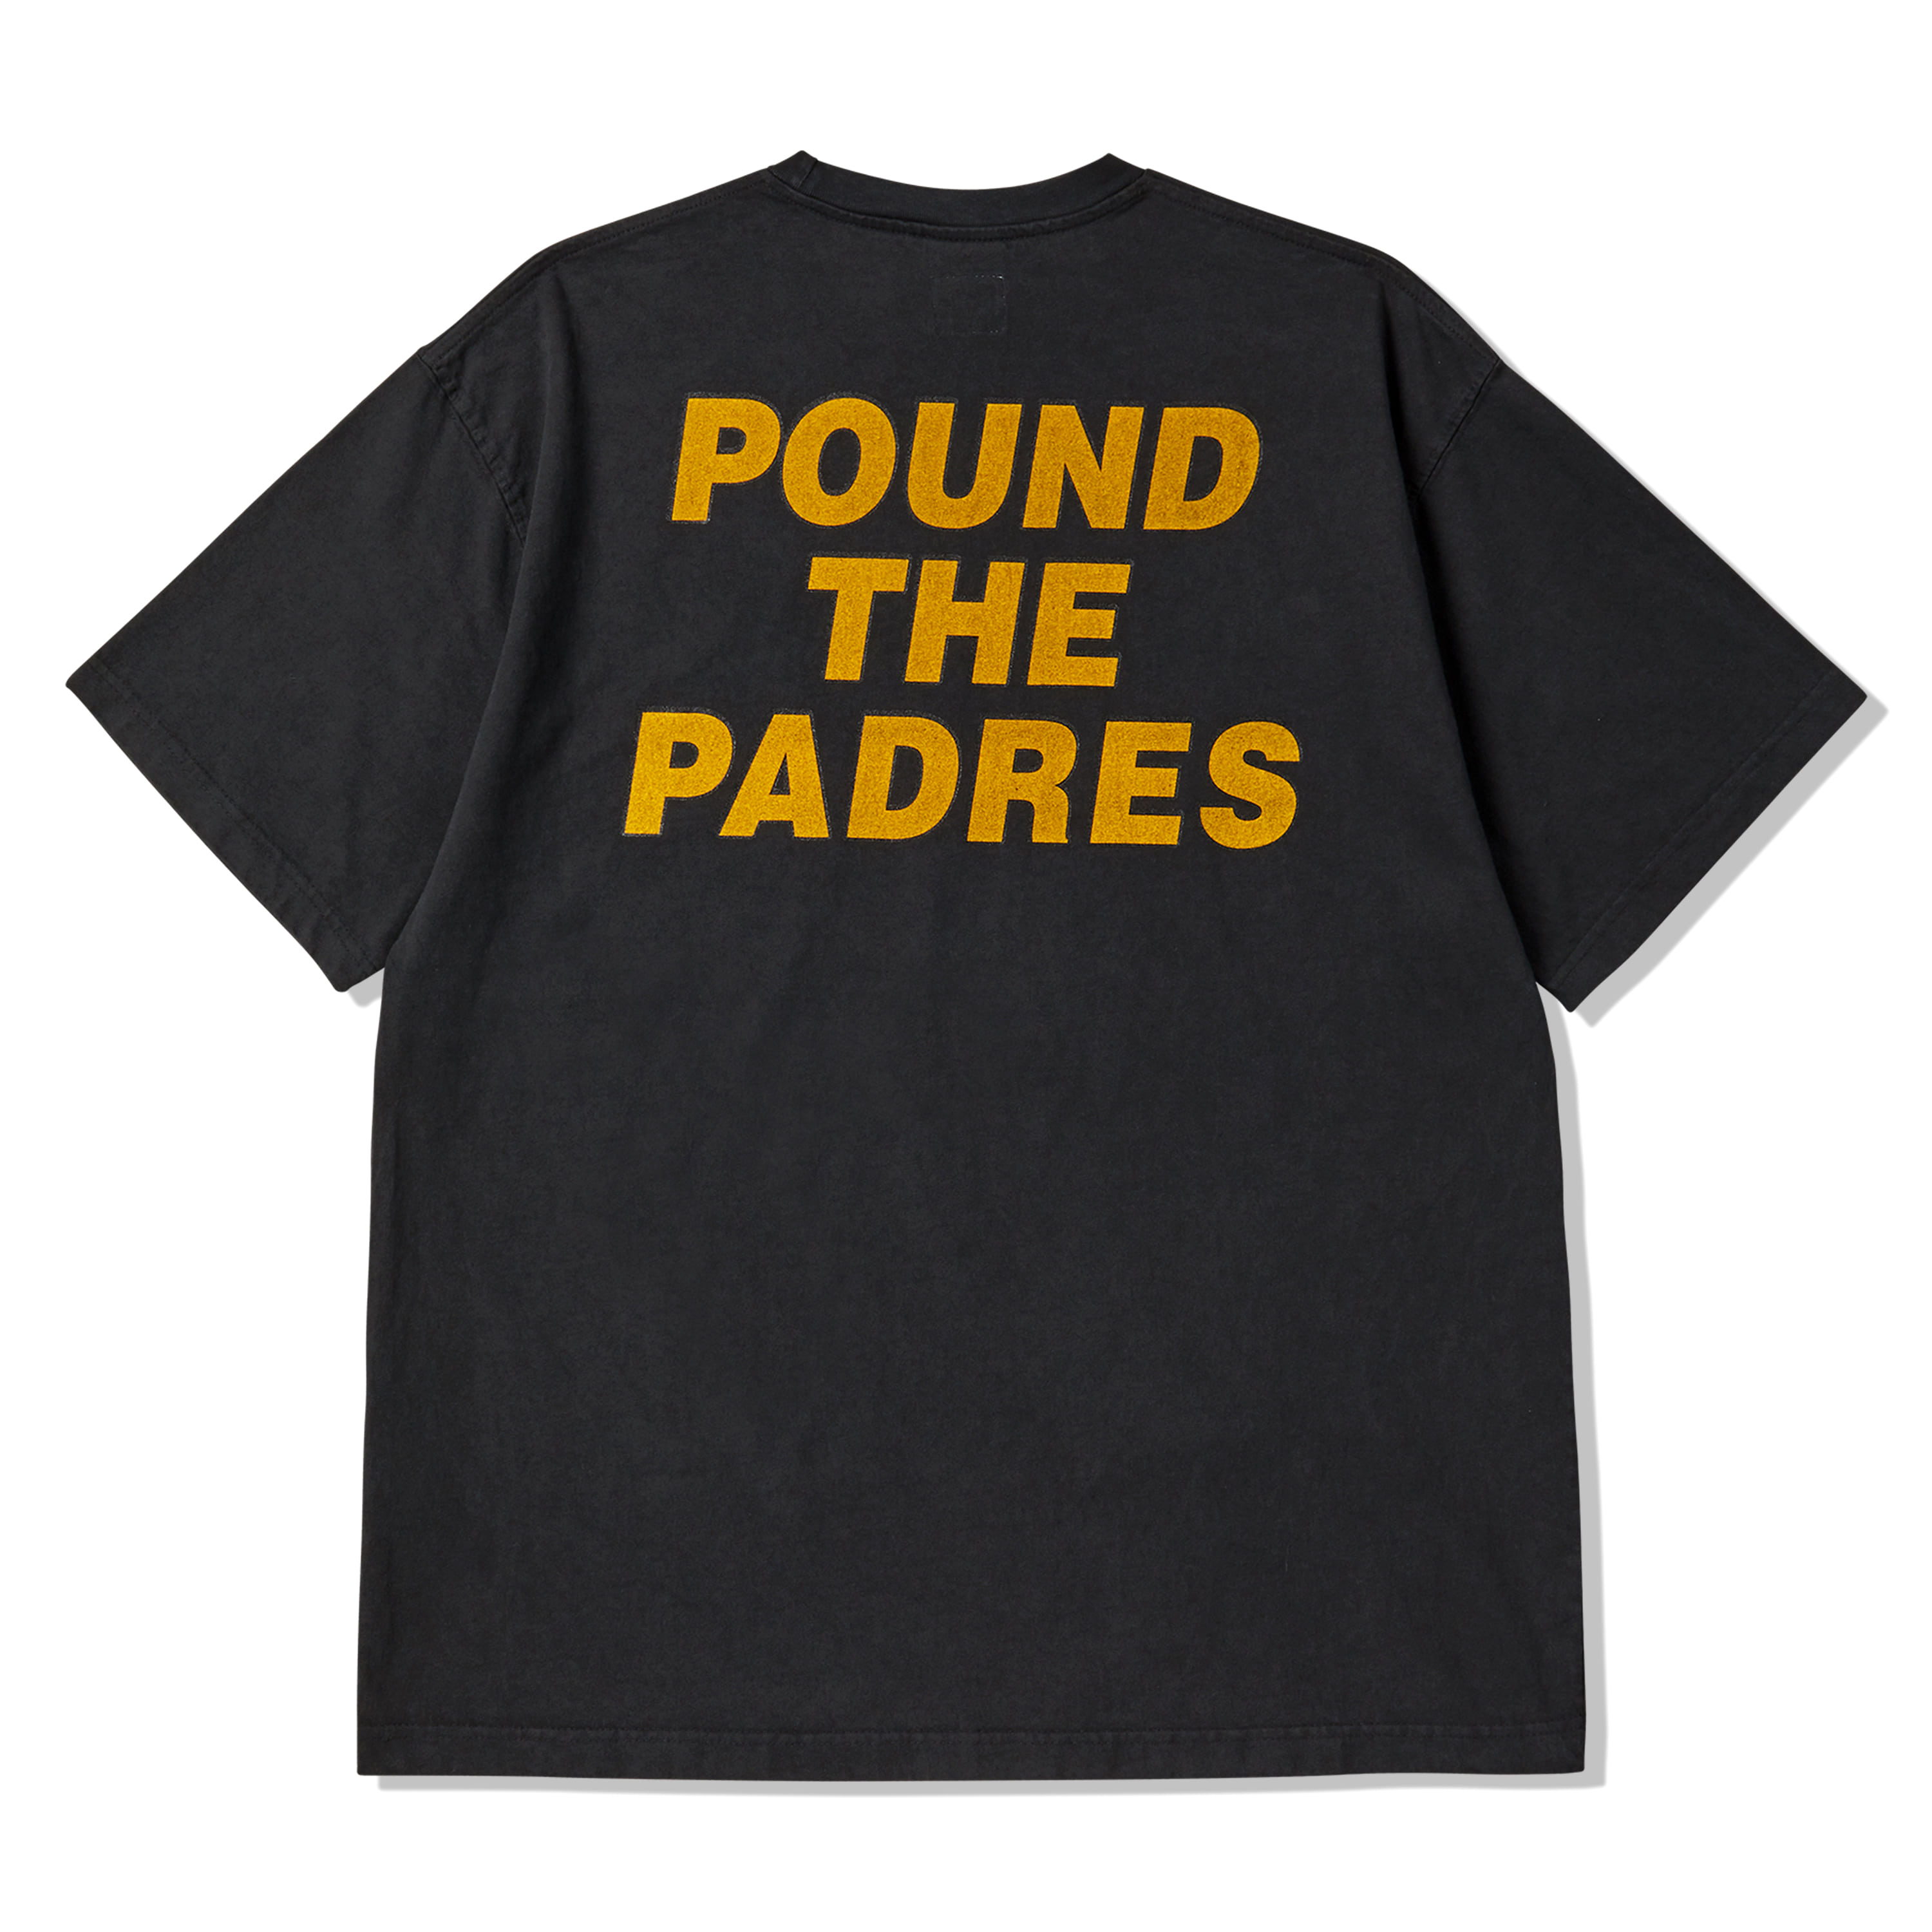 Pound the padres no.2